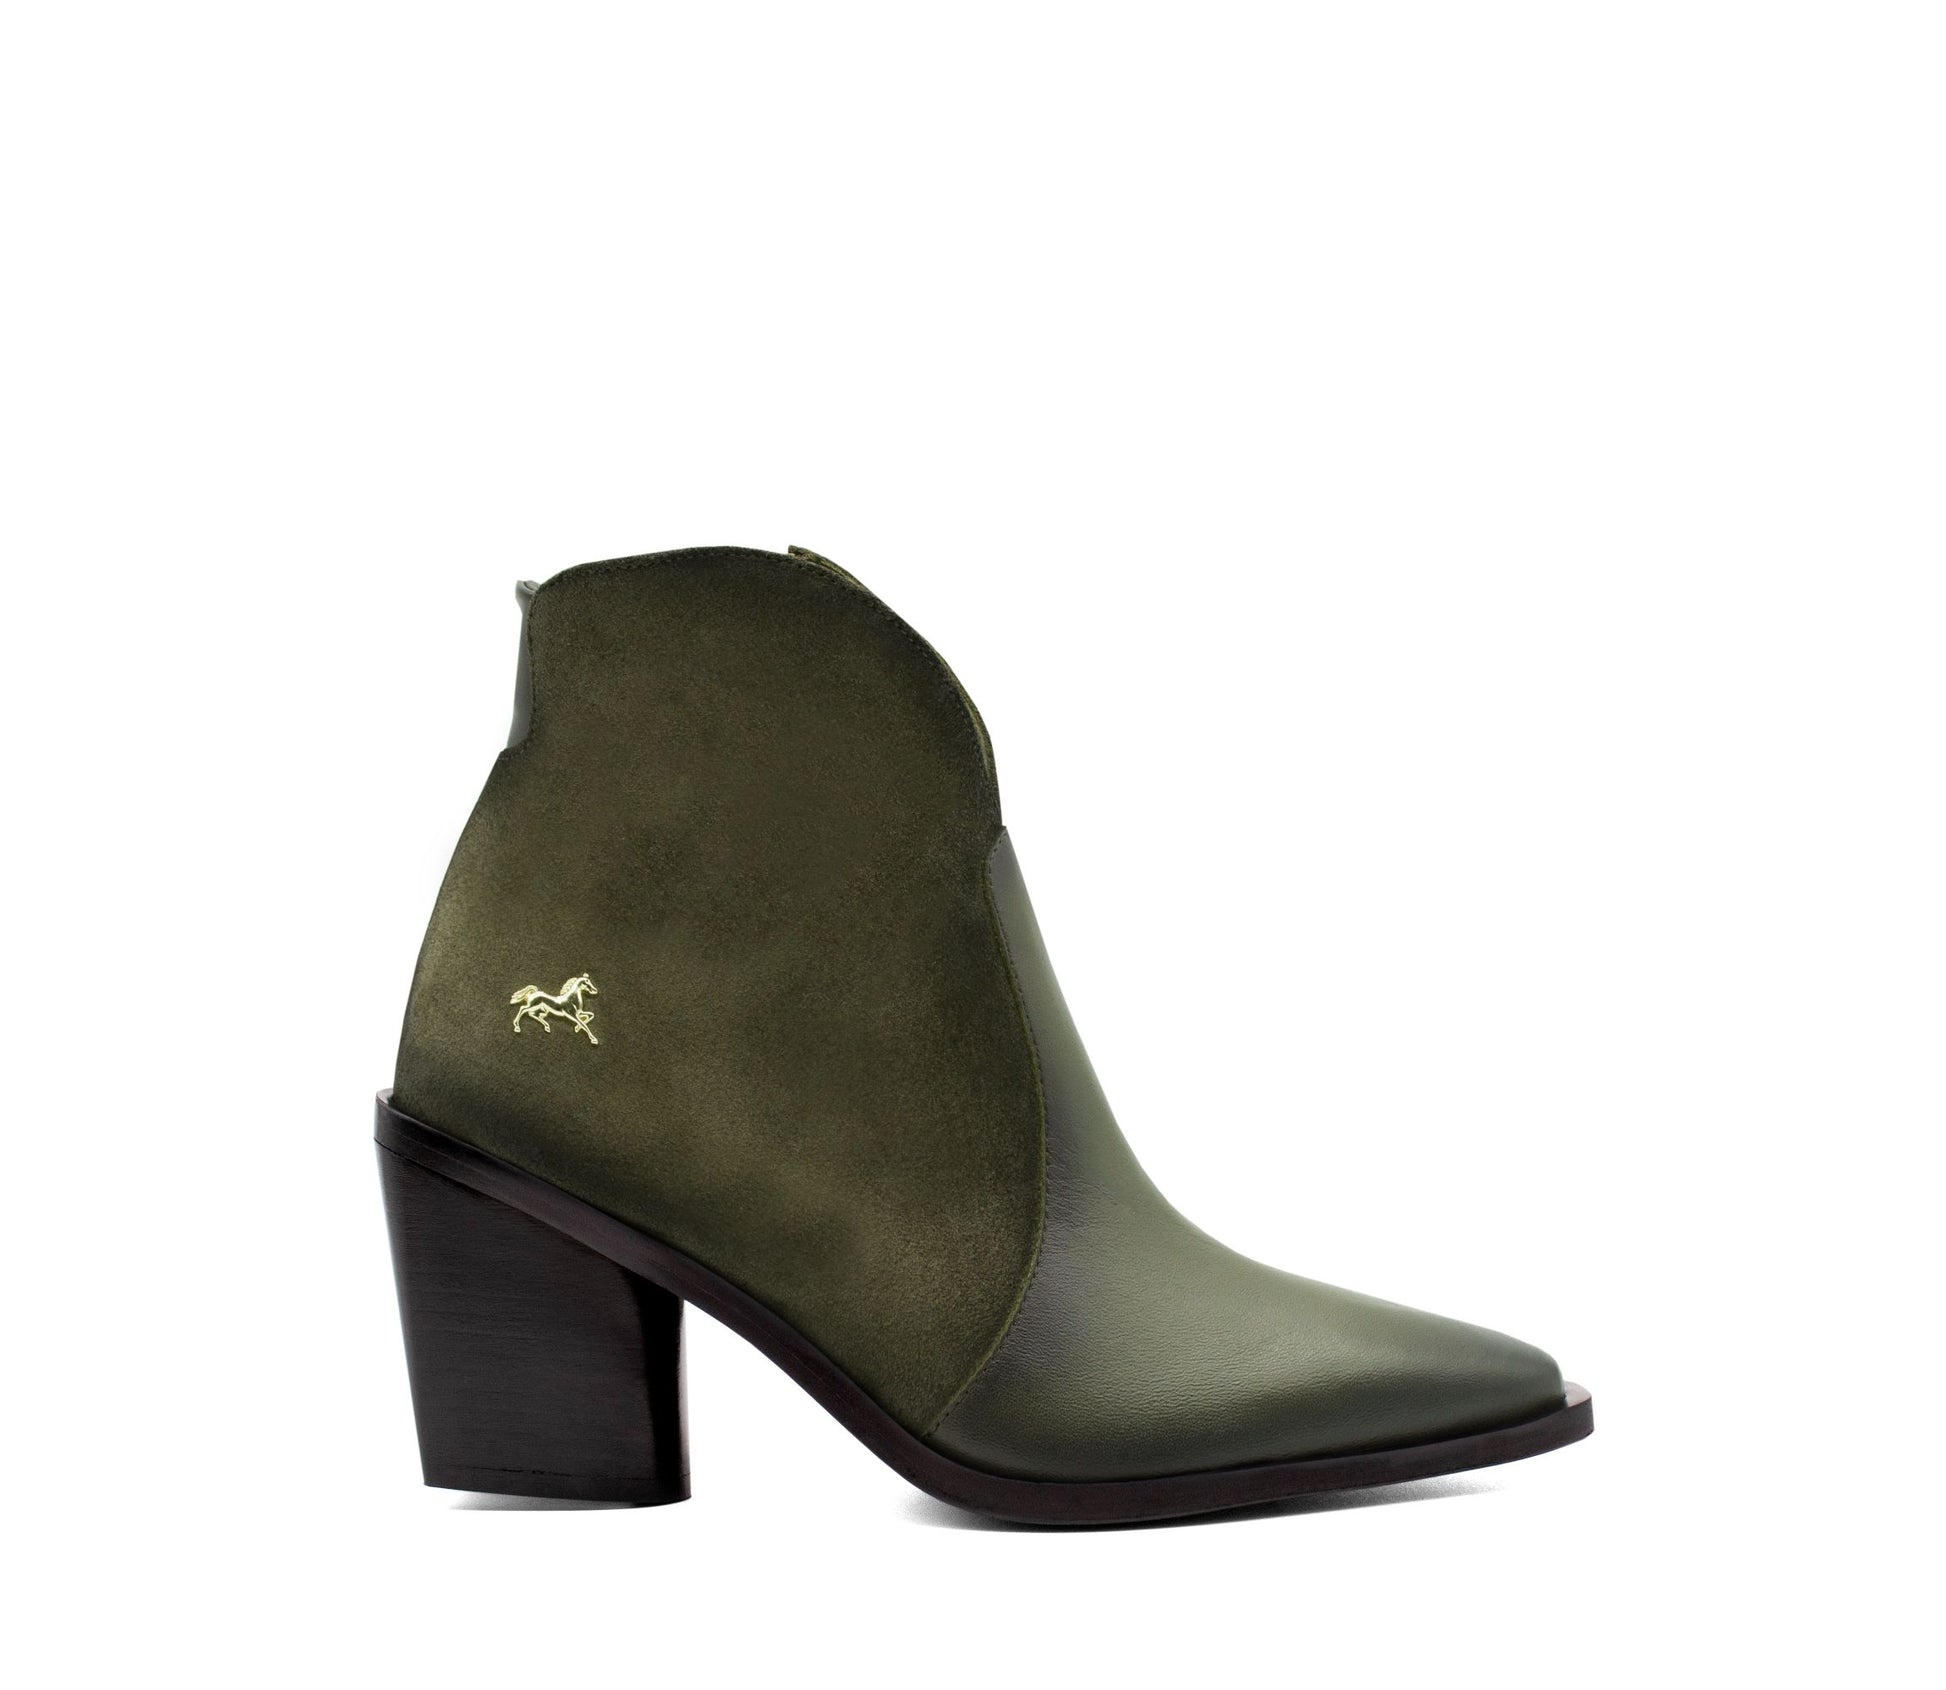 #color_ DarkOliveGreen | Cavalinho Arizona Ankle Boots - DarkOliveGreen - 48160400.09_1